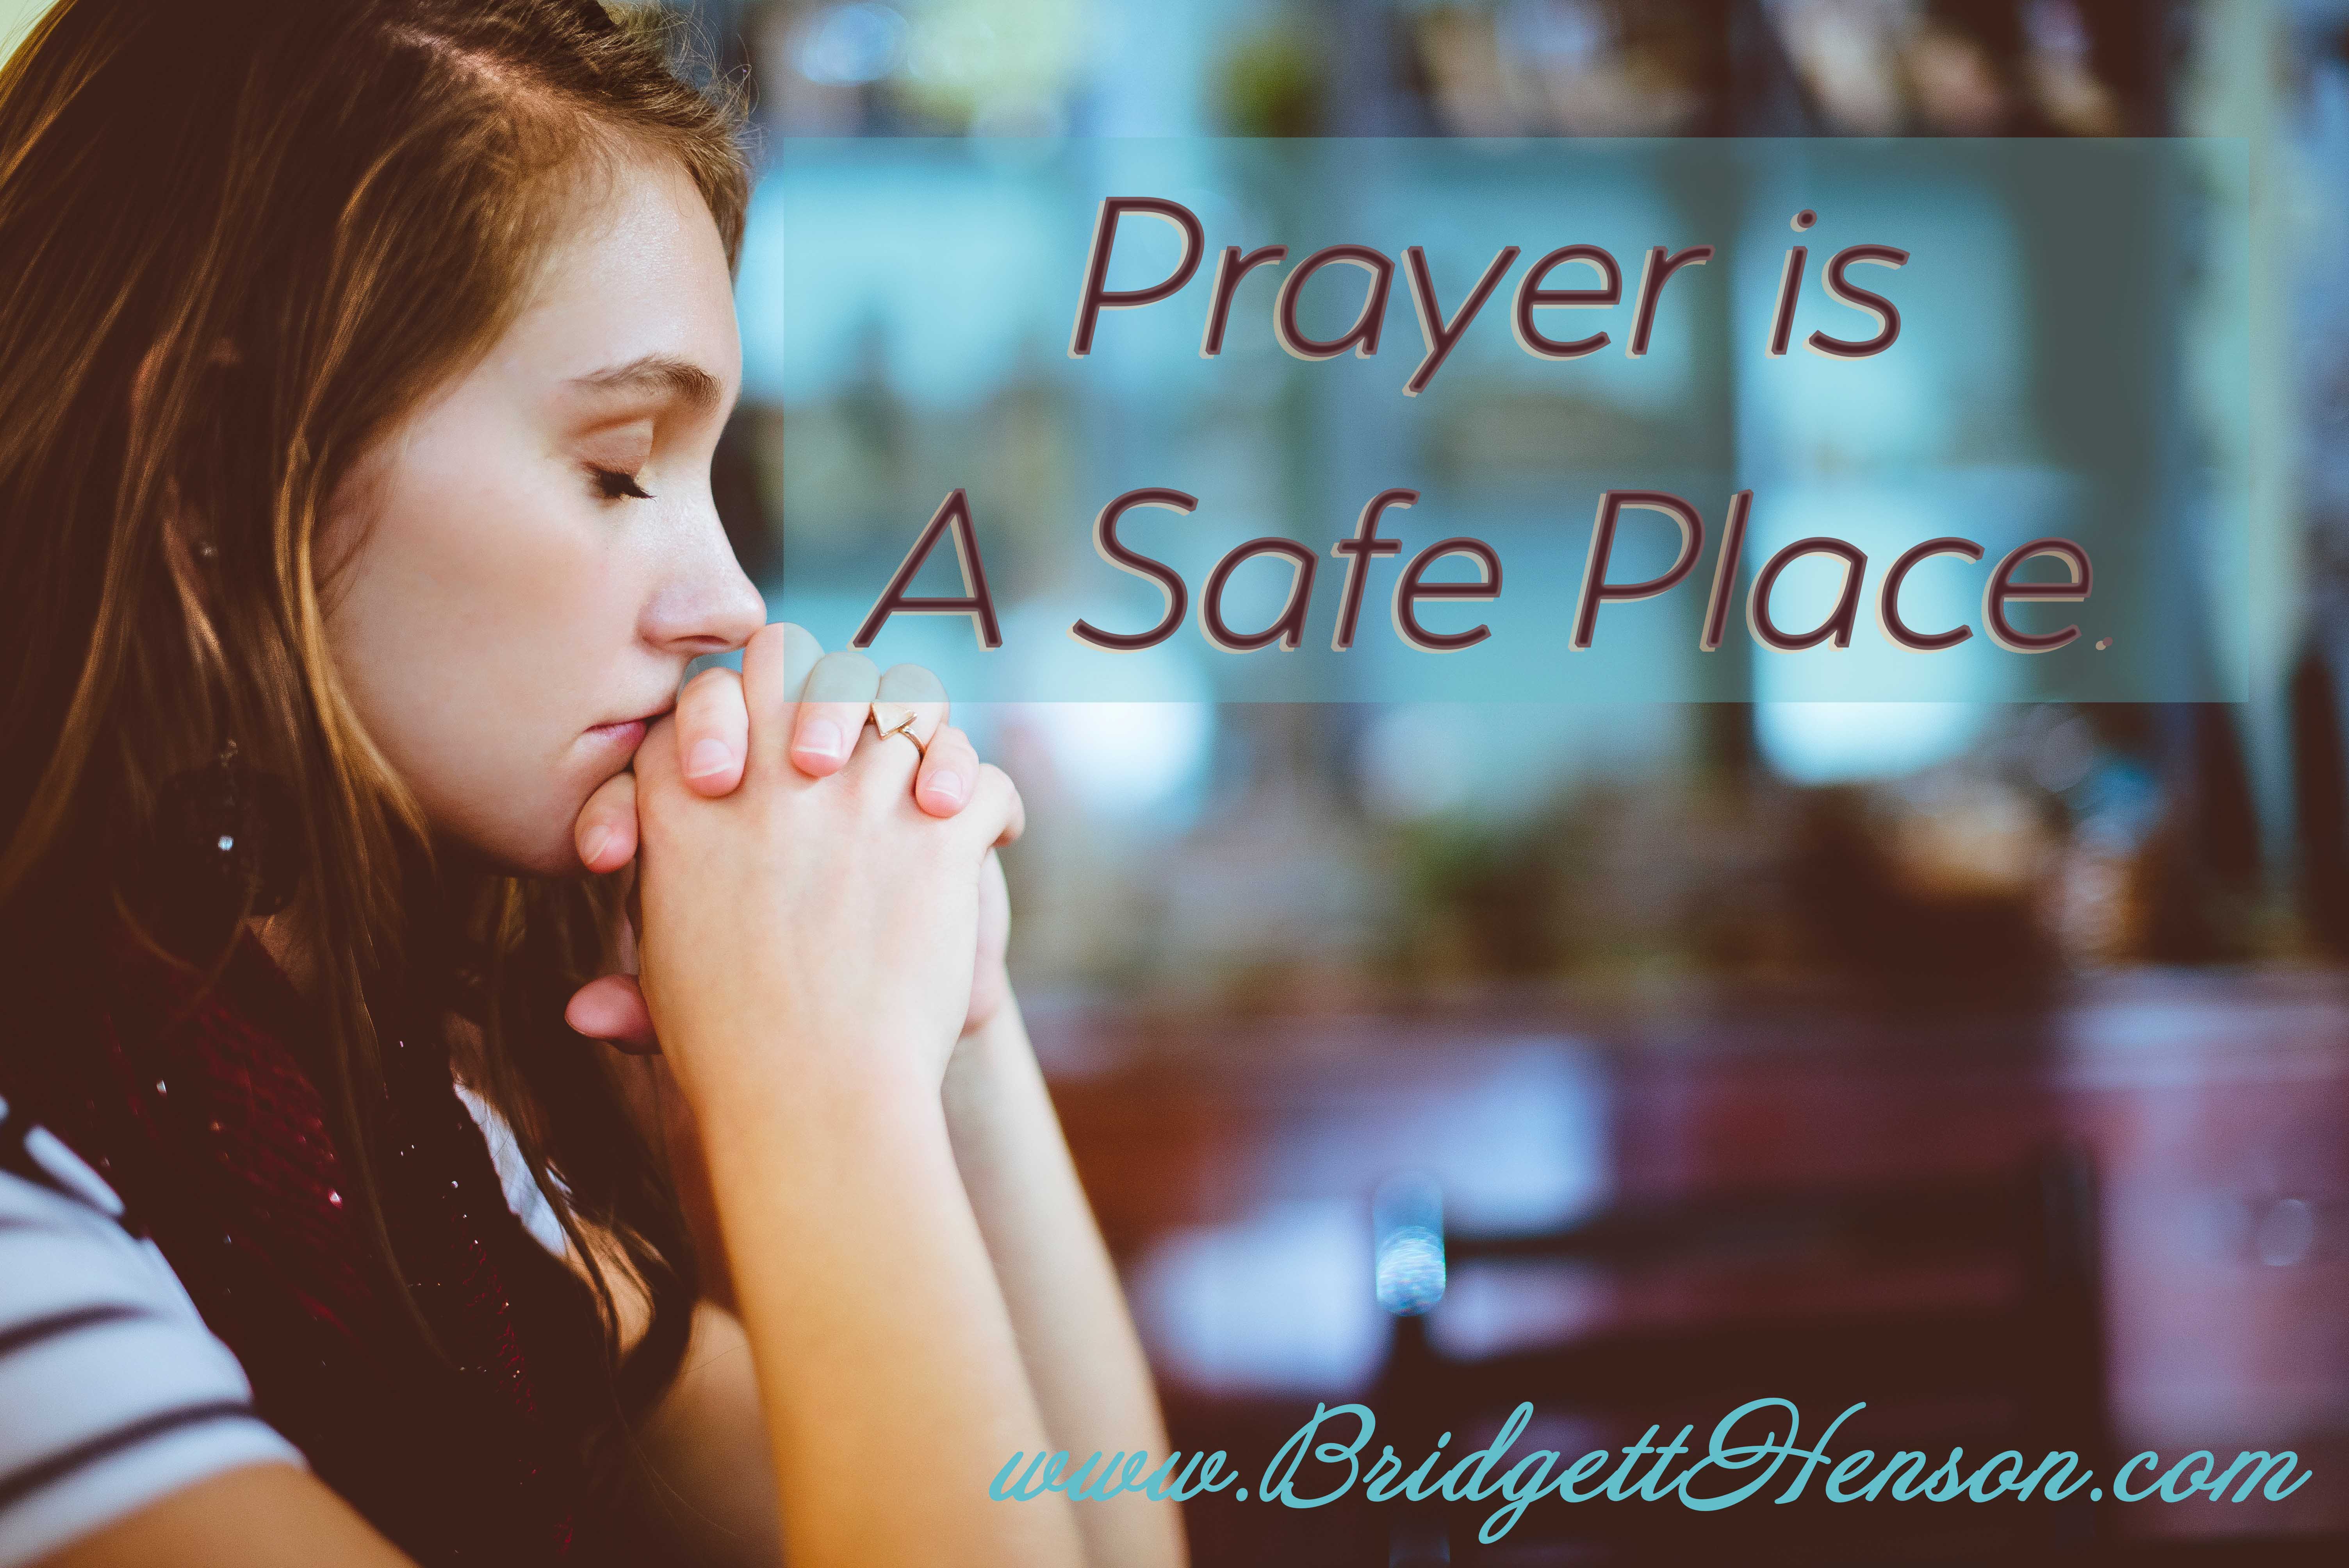 Prayer is a safe place.